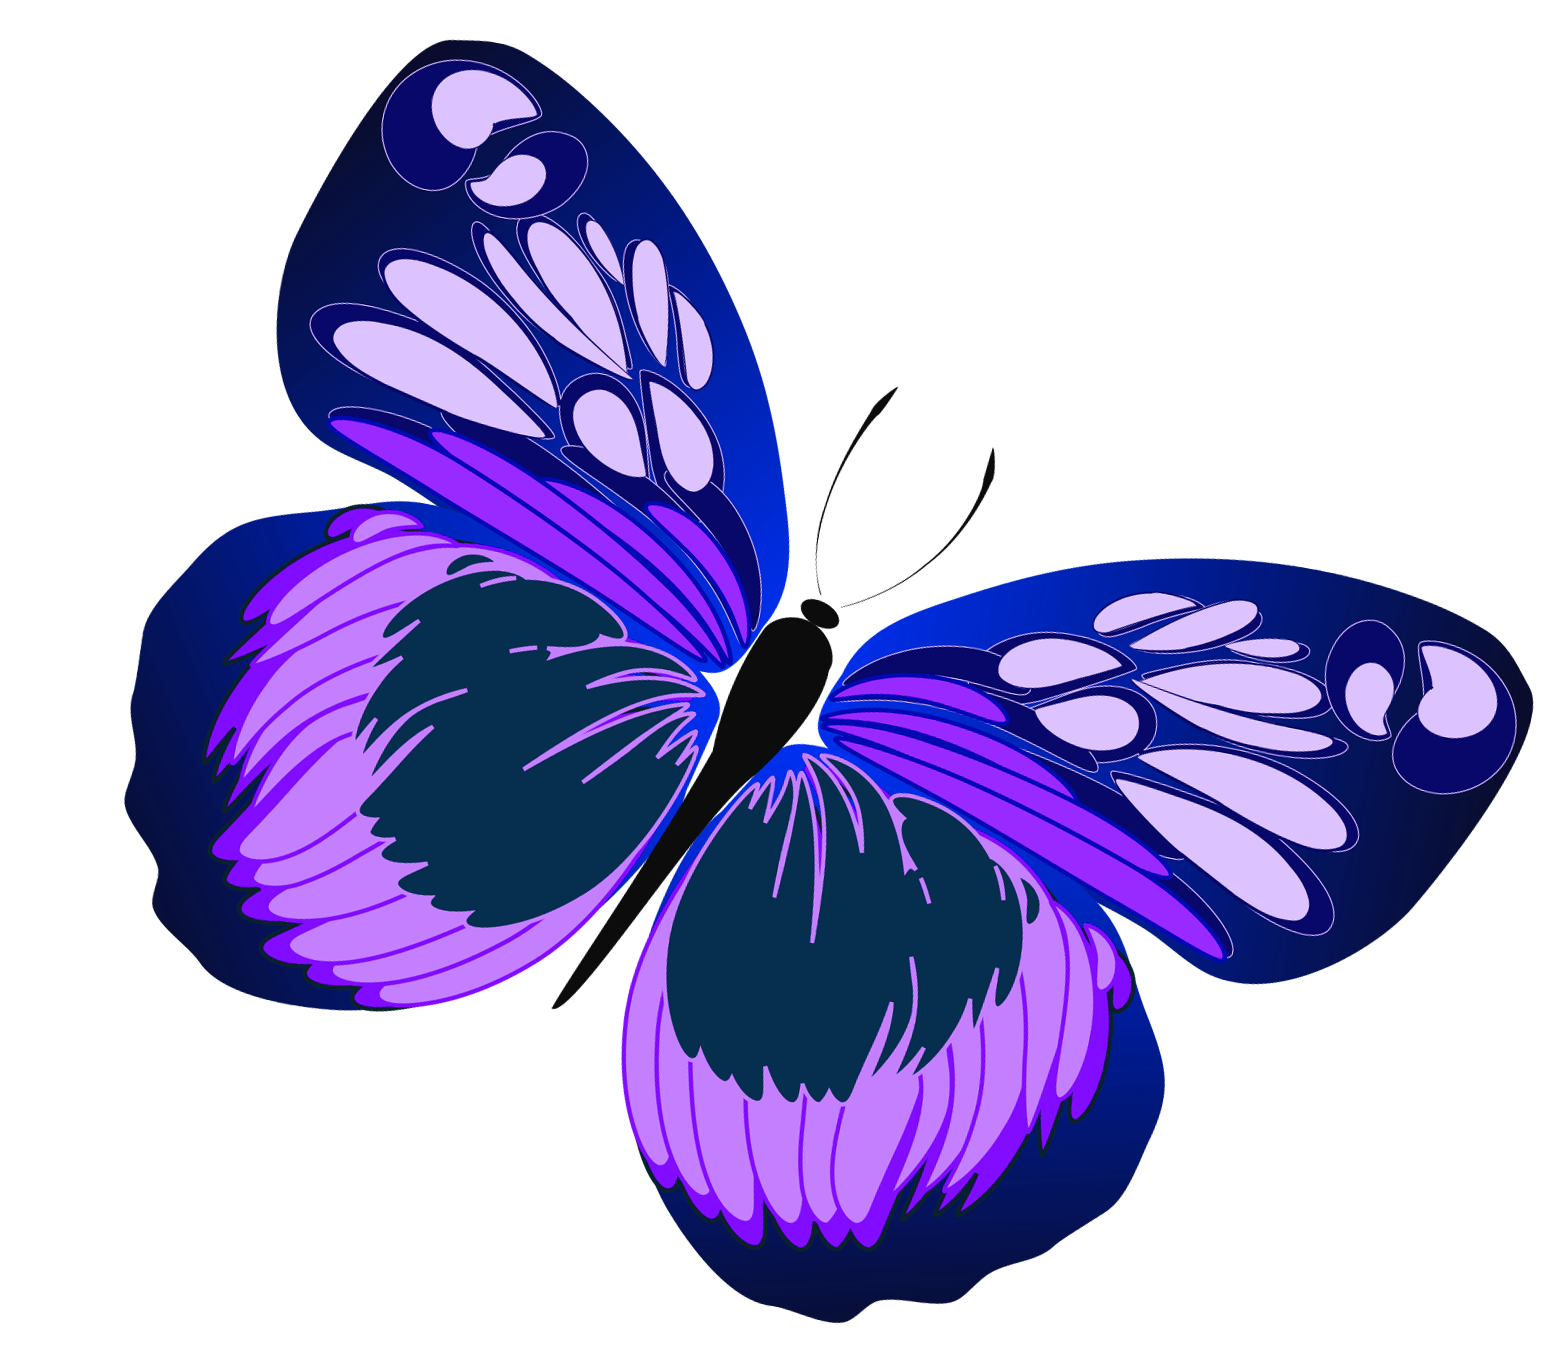 Butterflies Free Download Clipart